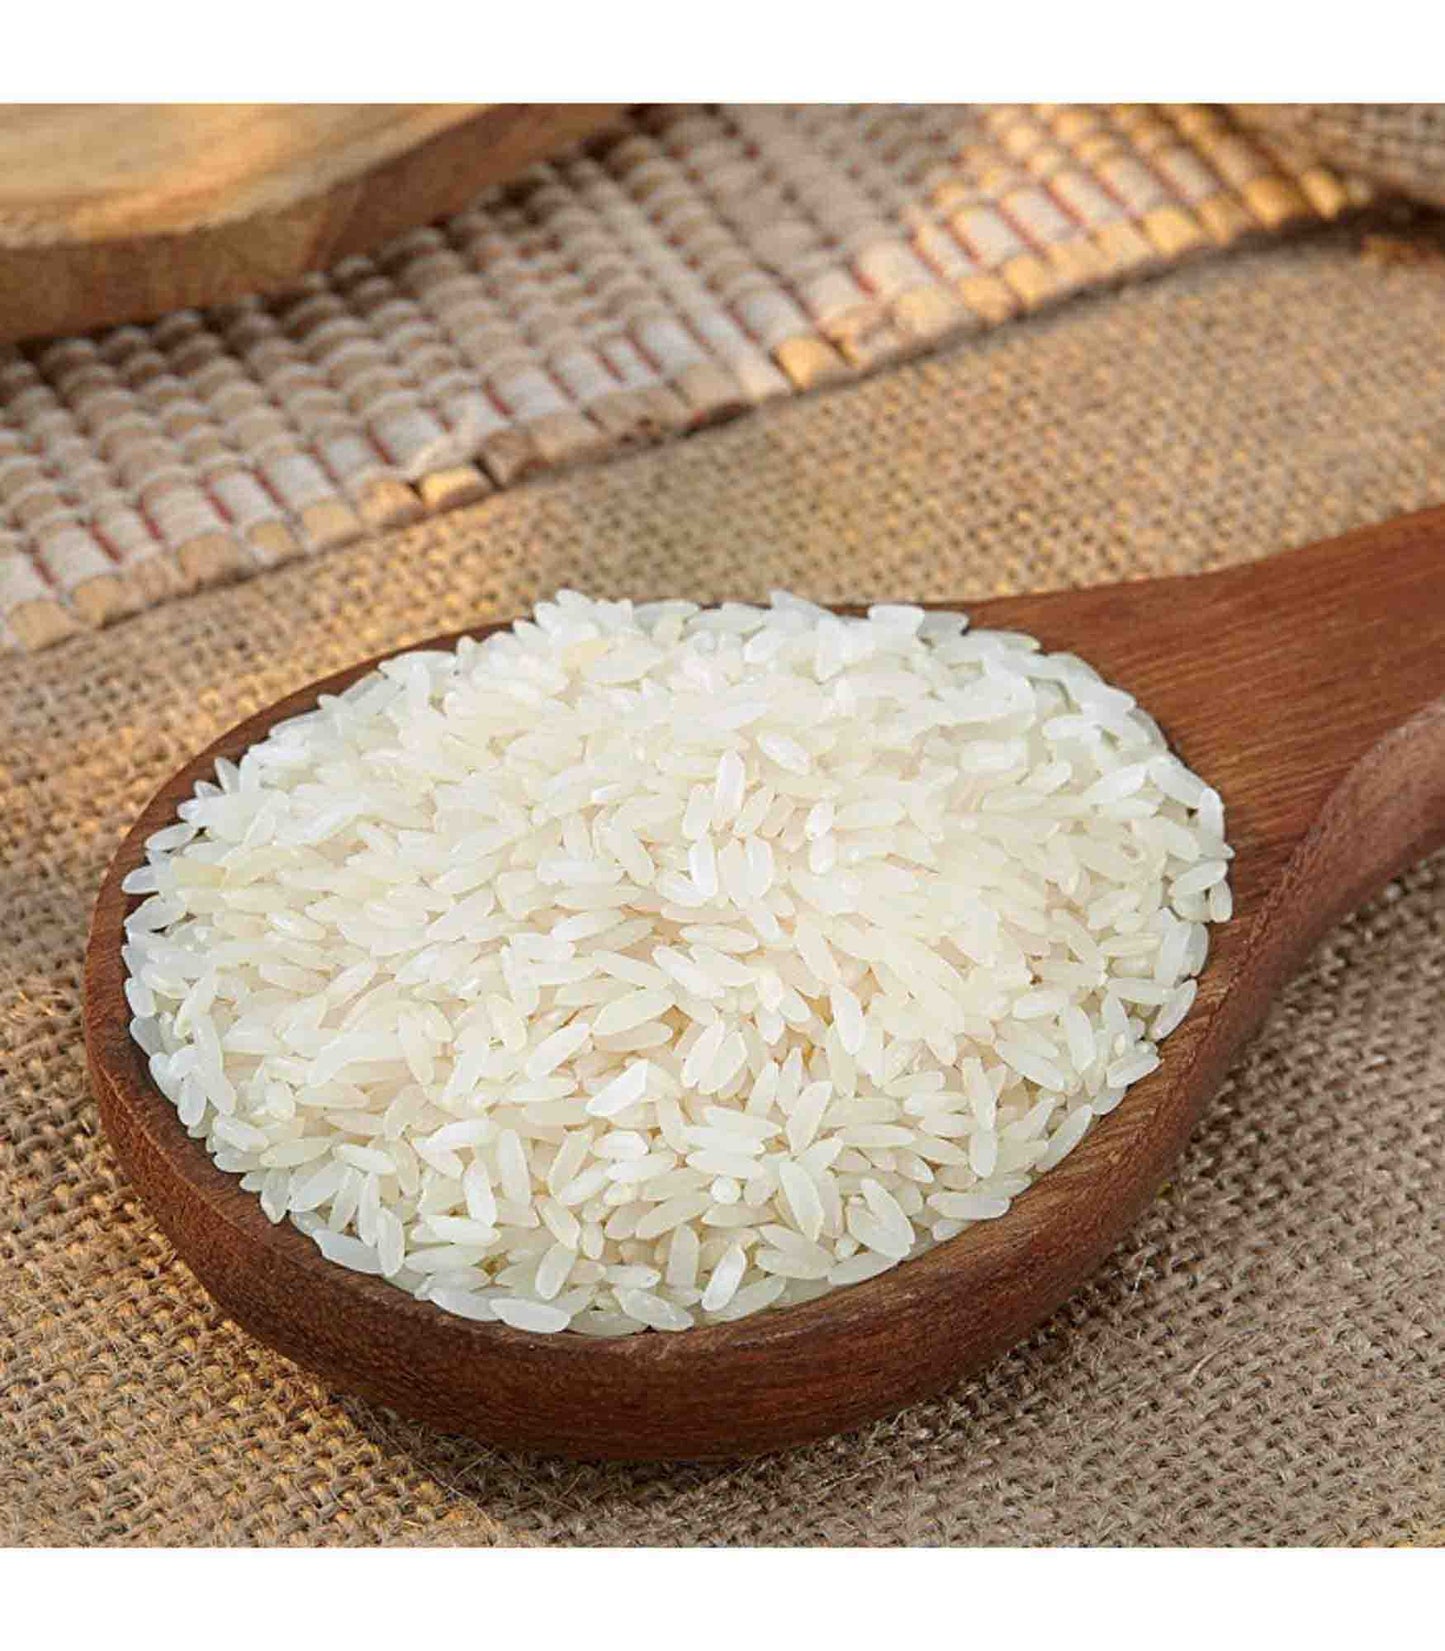 Ponni Raw Rice 1 kg